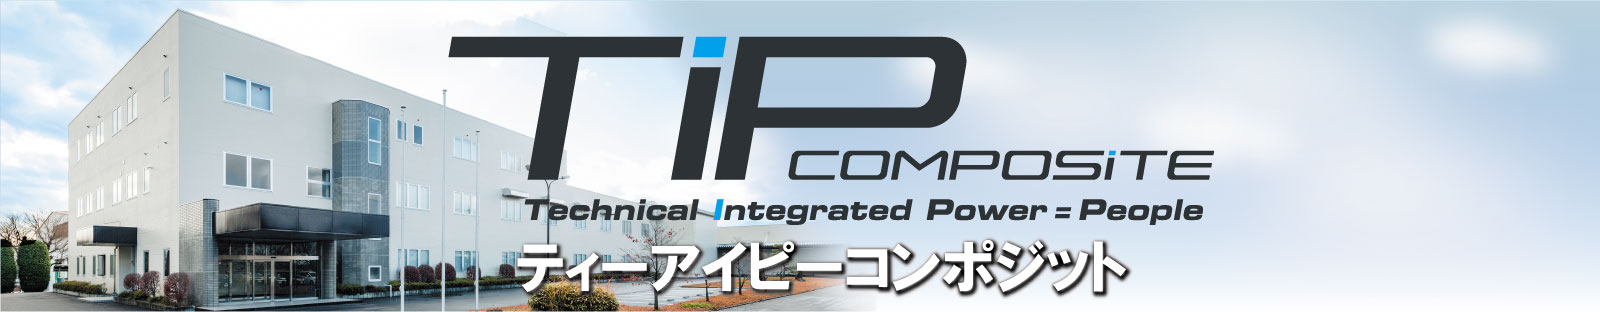 TIP composite株式会社